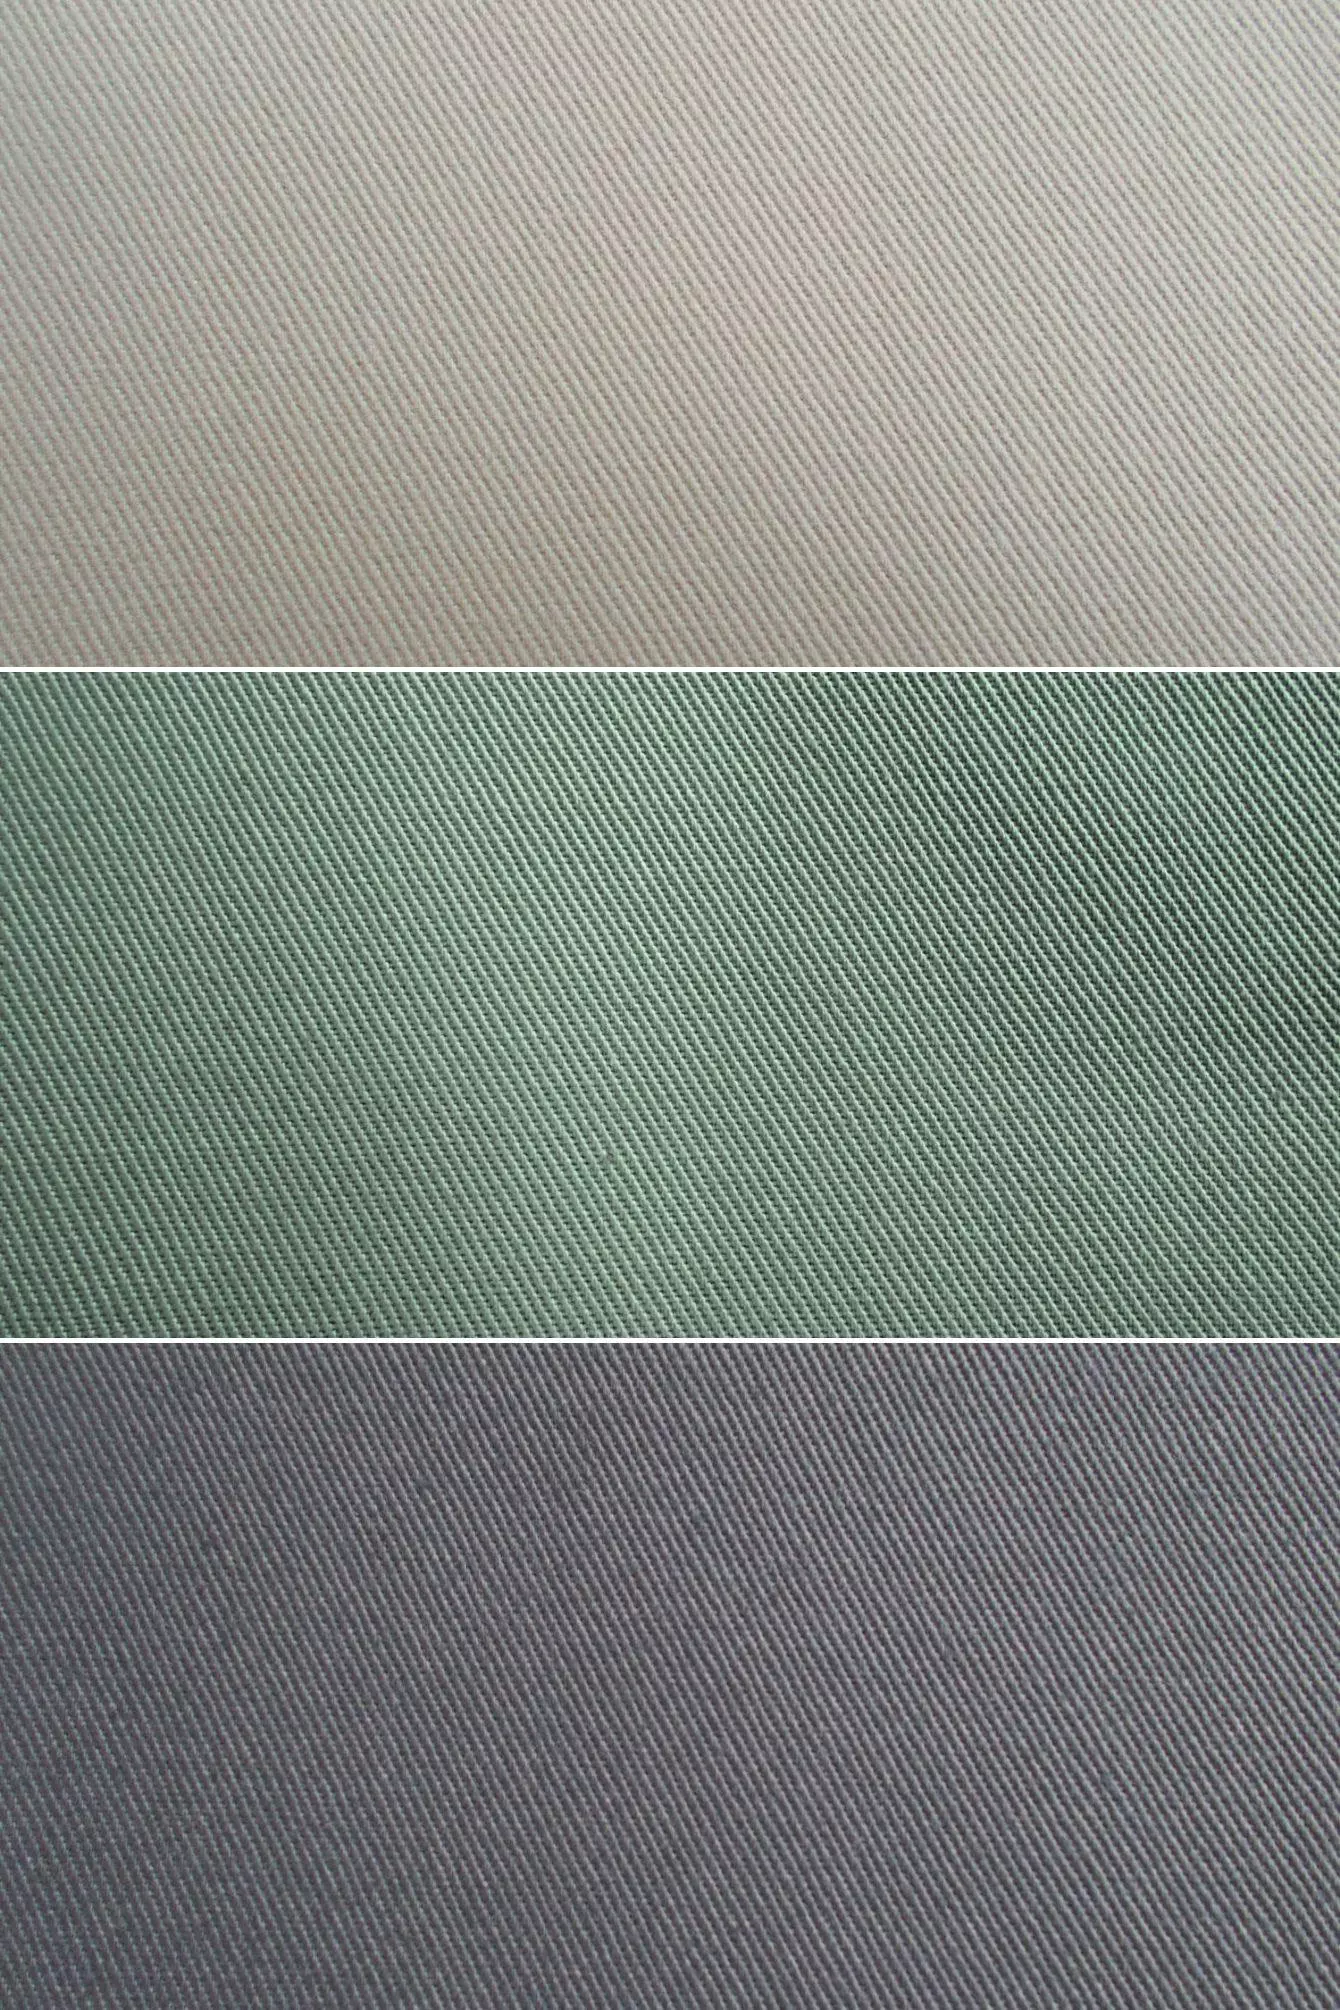 Chino cloth colors - khaki, olive, and grey